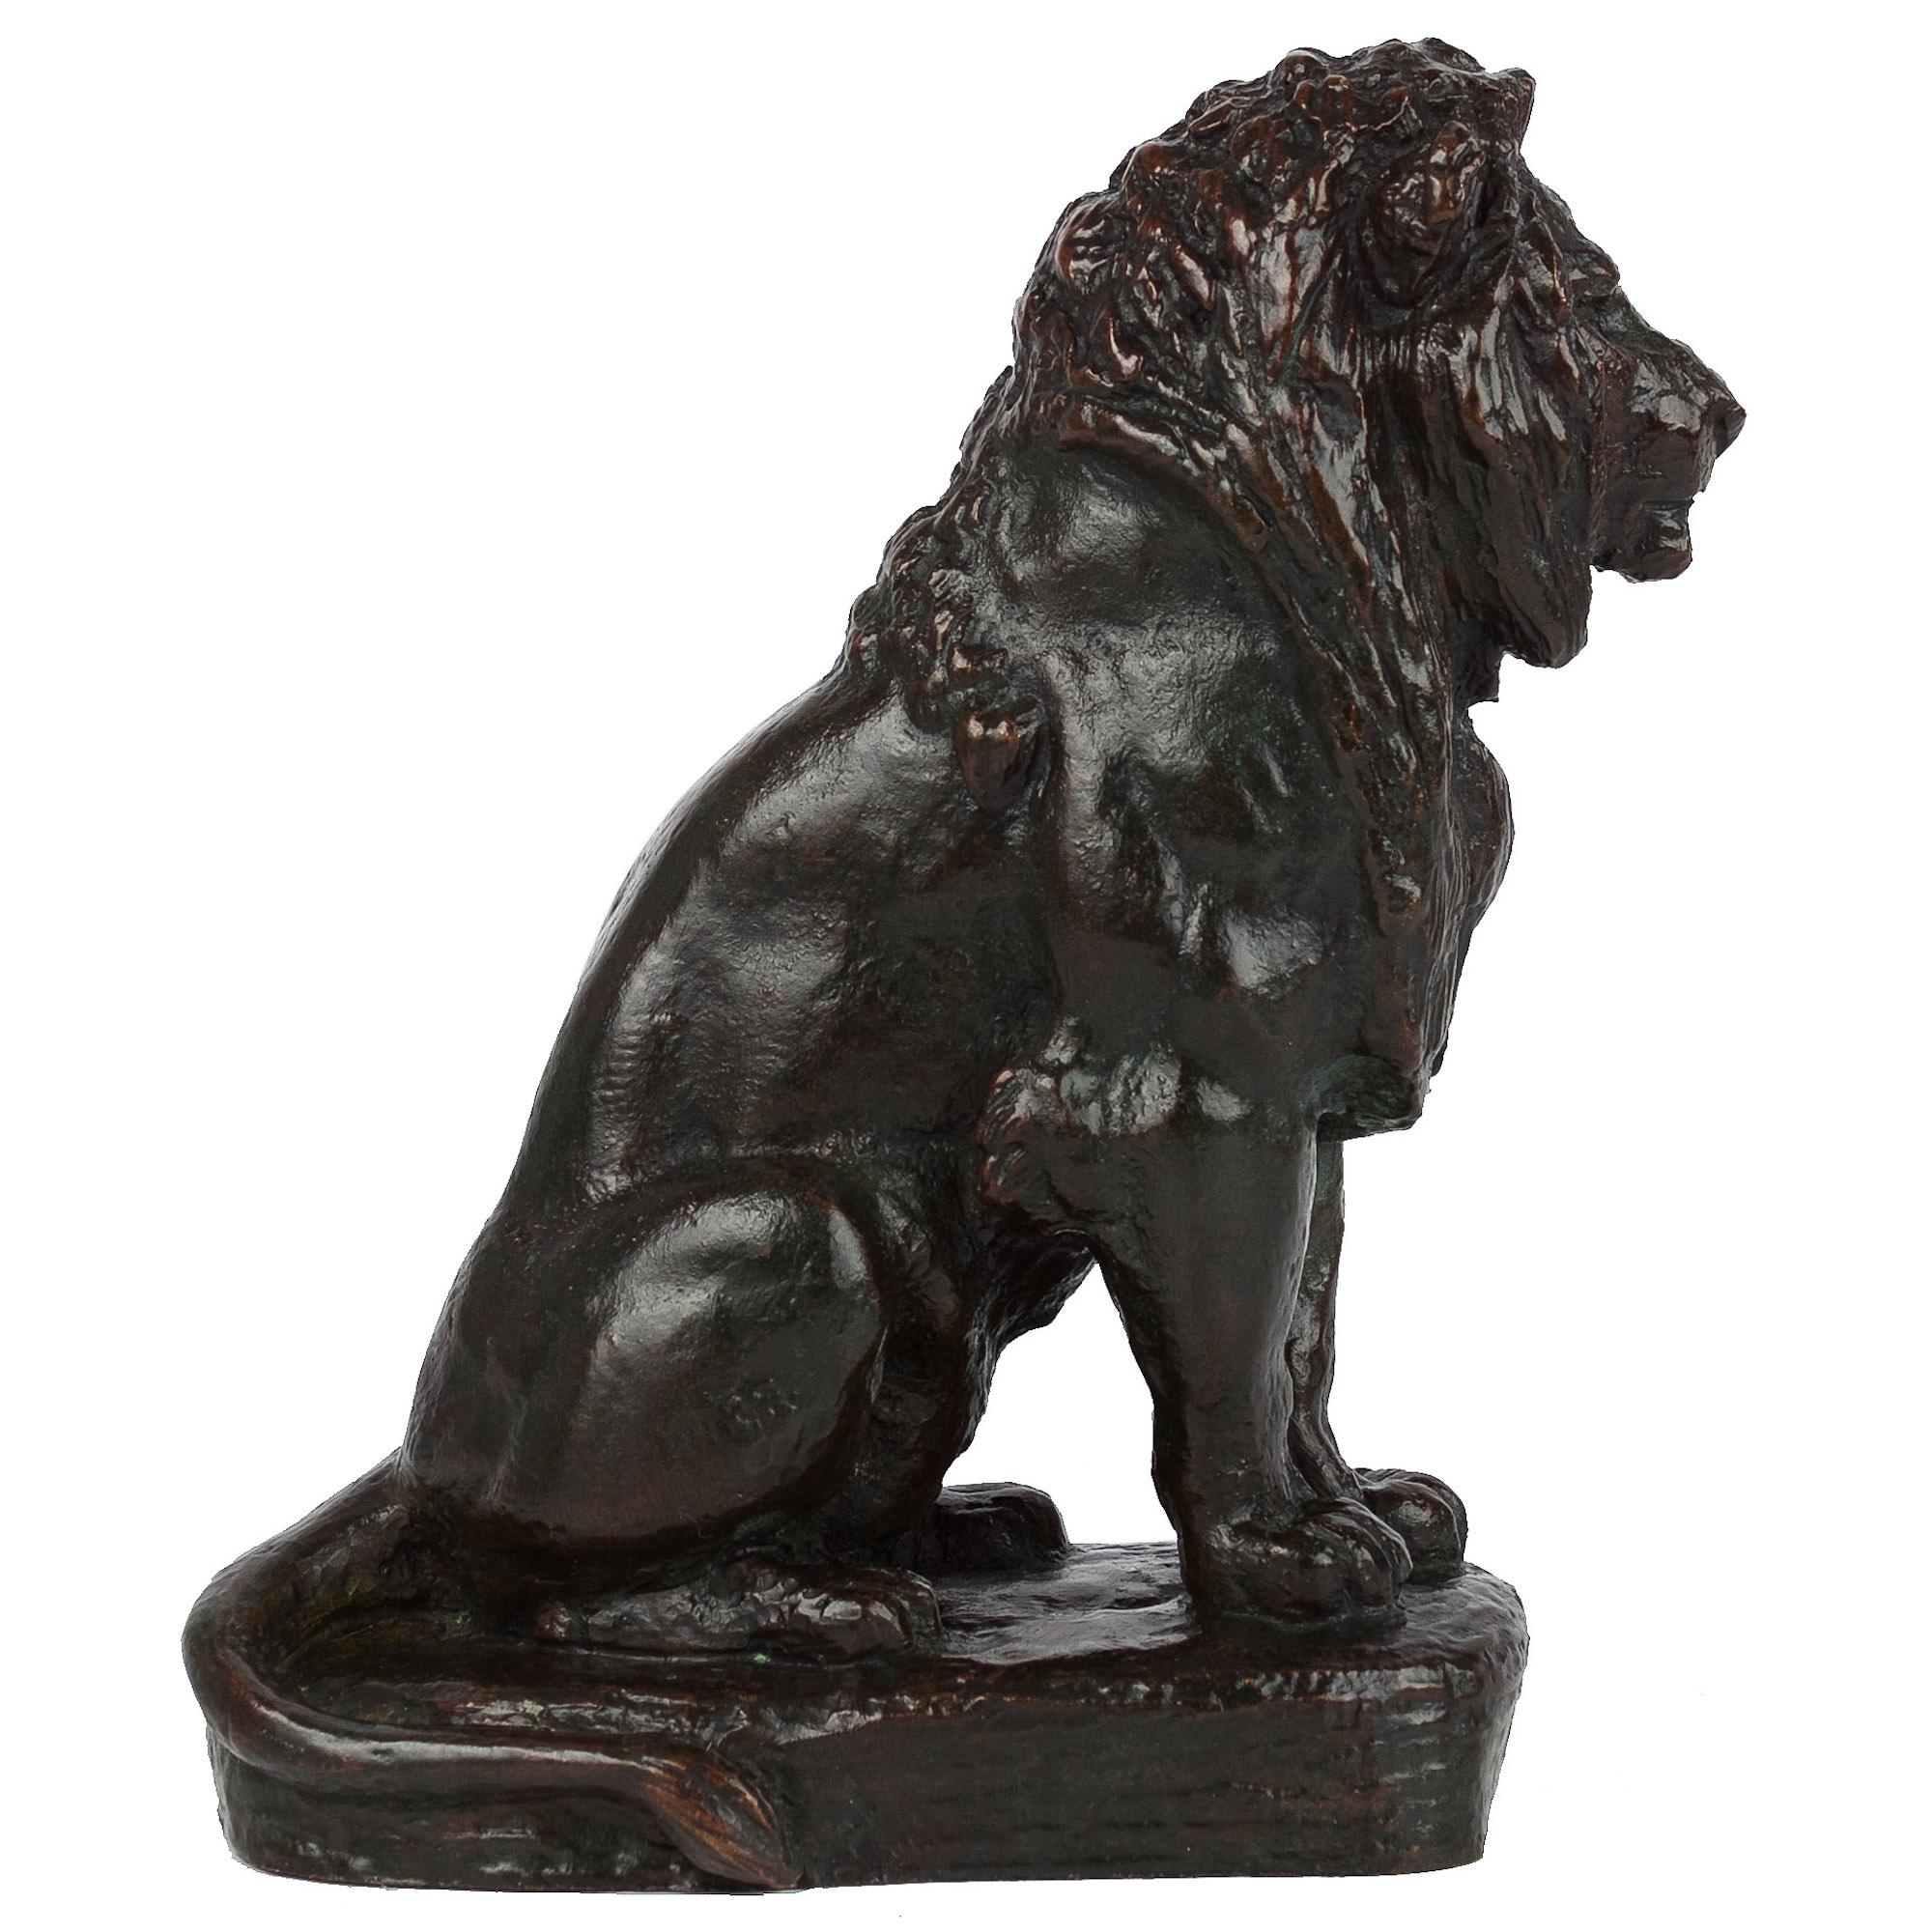 Romantic Rare French Antique Bronze Sculpture “Lion Assis no.2” after Antoine-Louis Barye For Sale